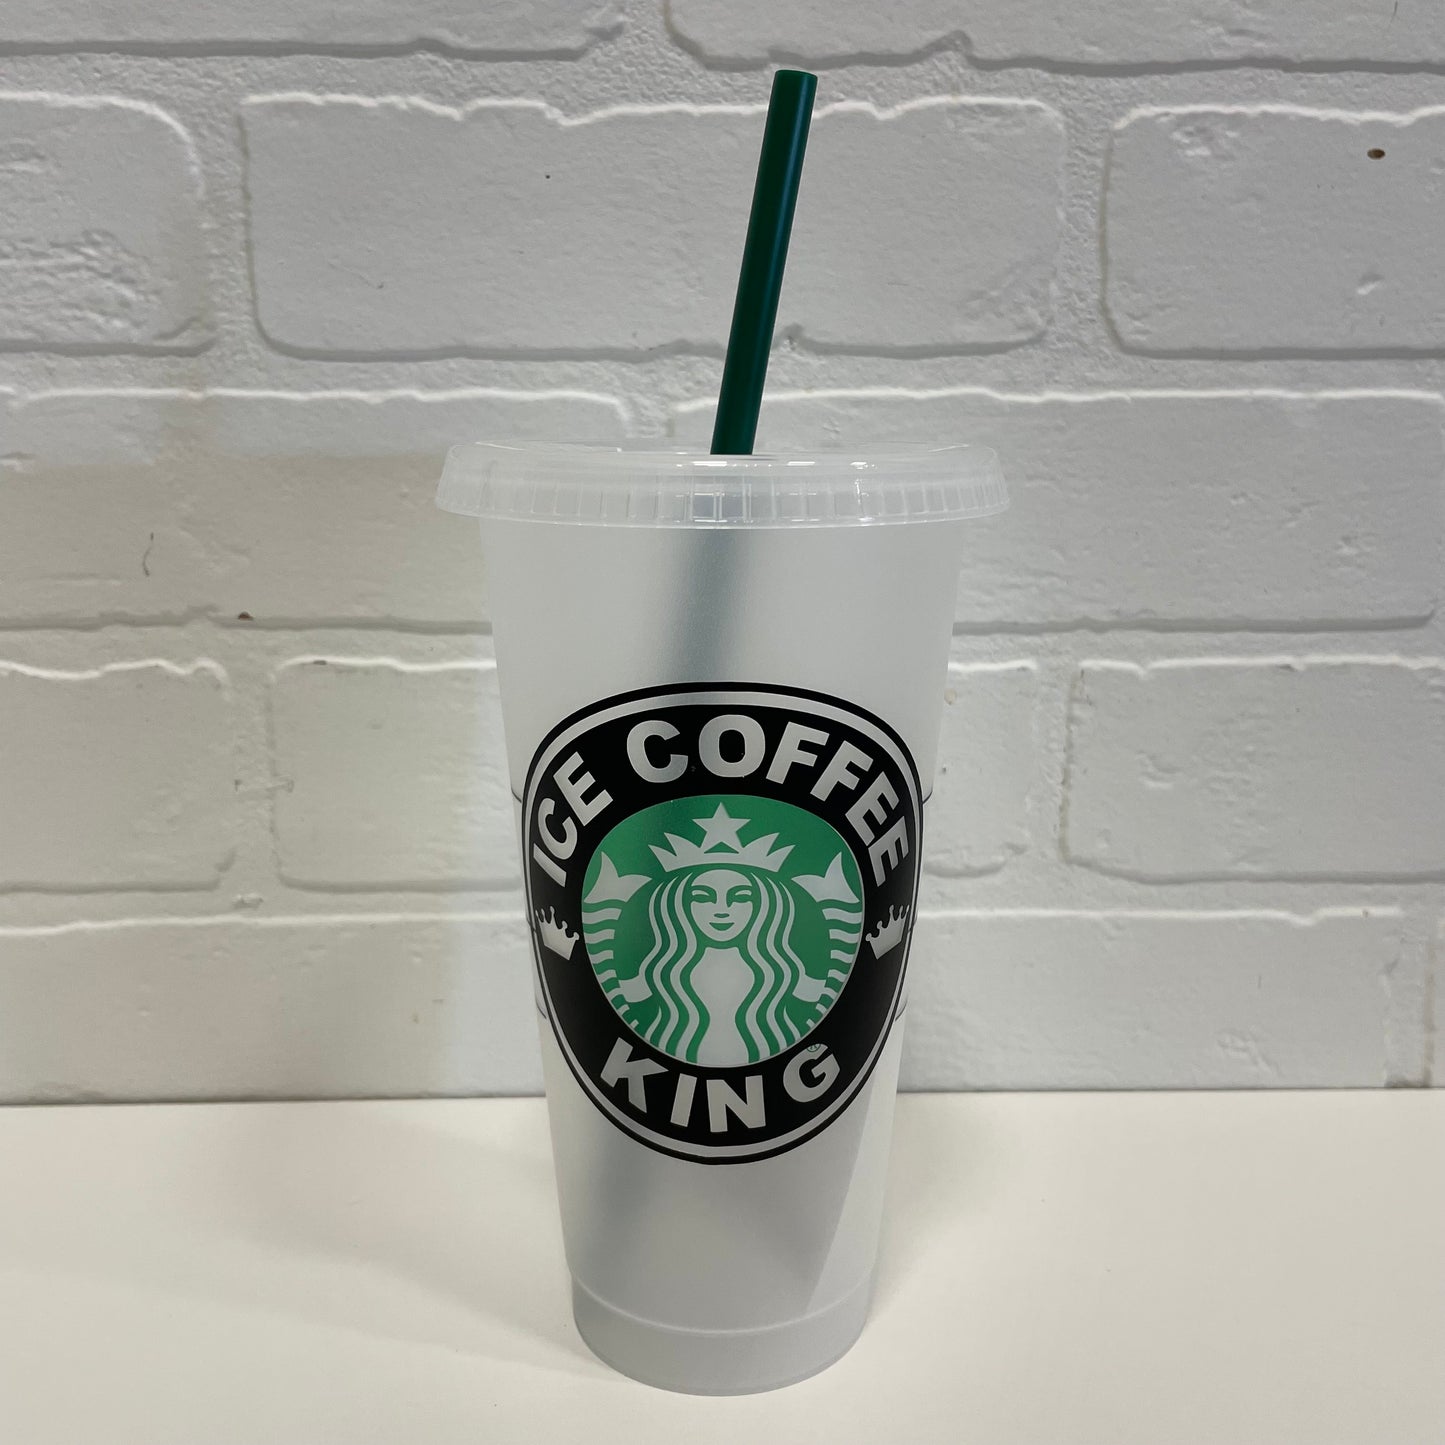 Starbucks Cup - Ice Coffee King